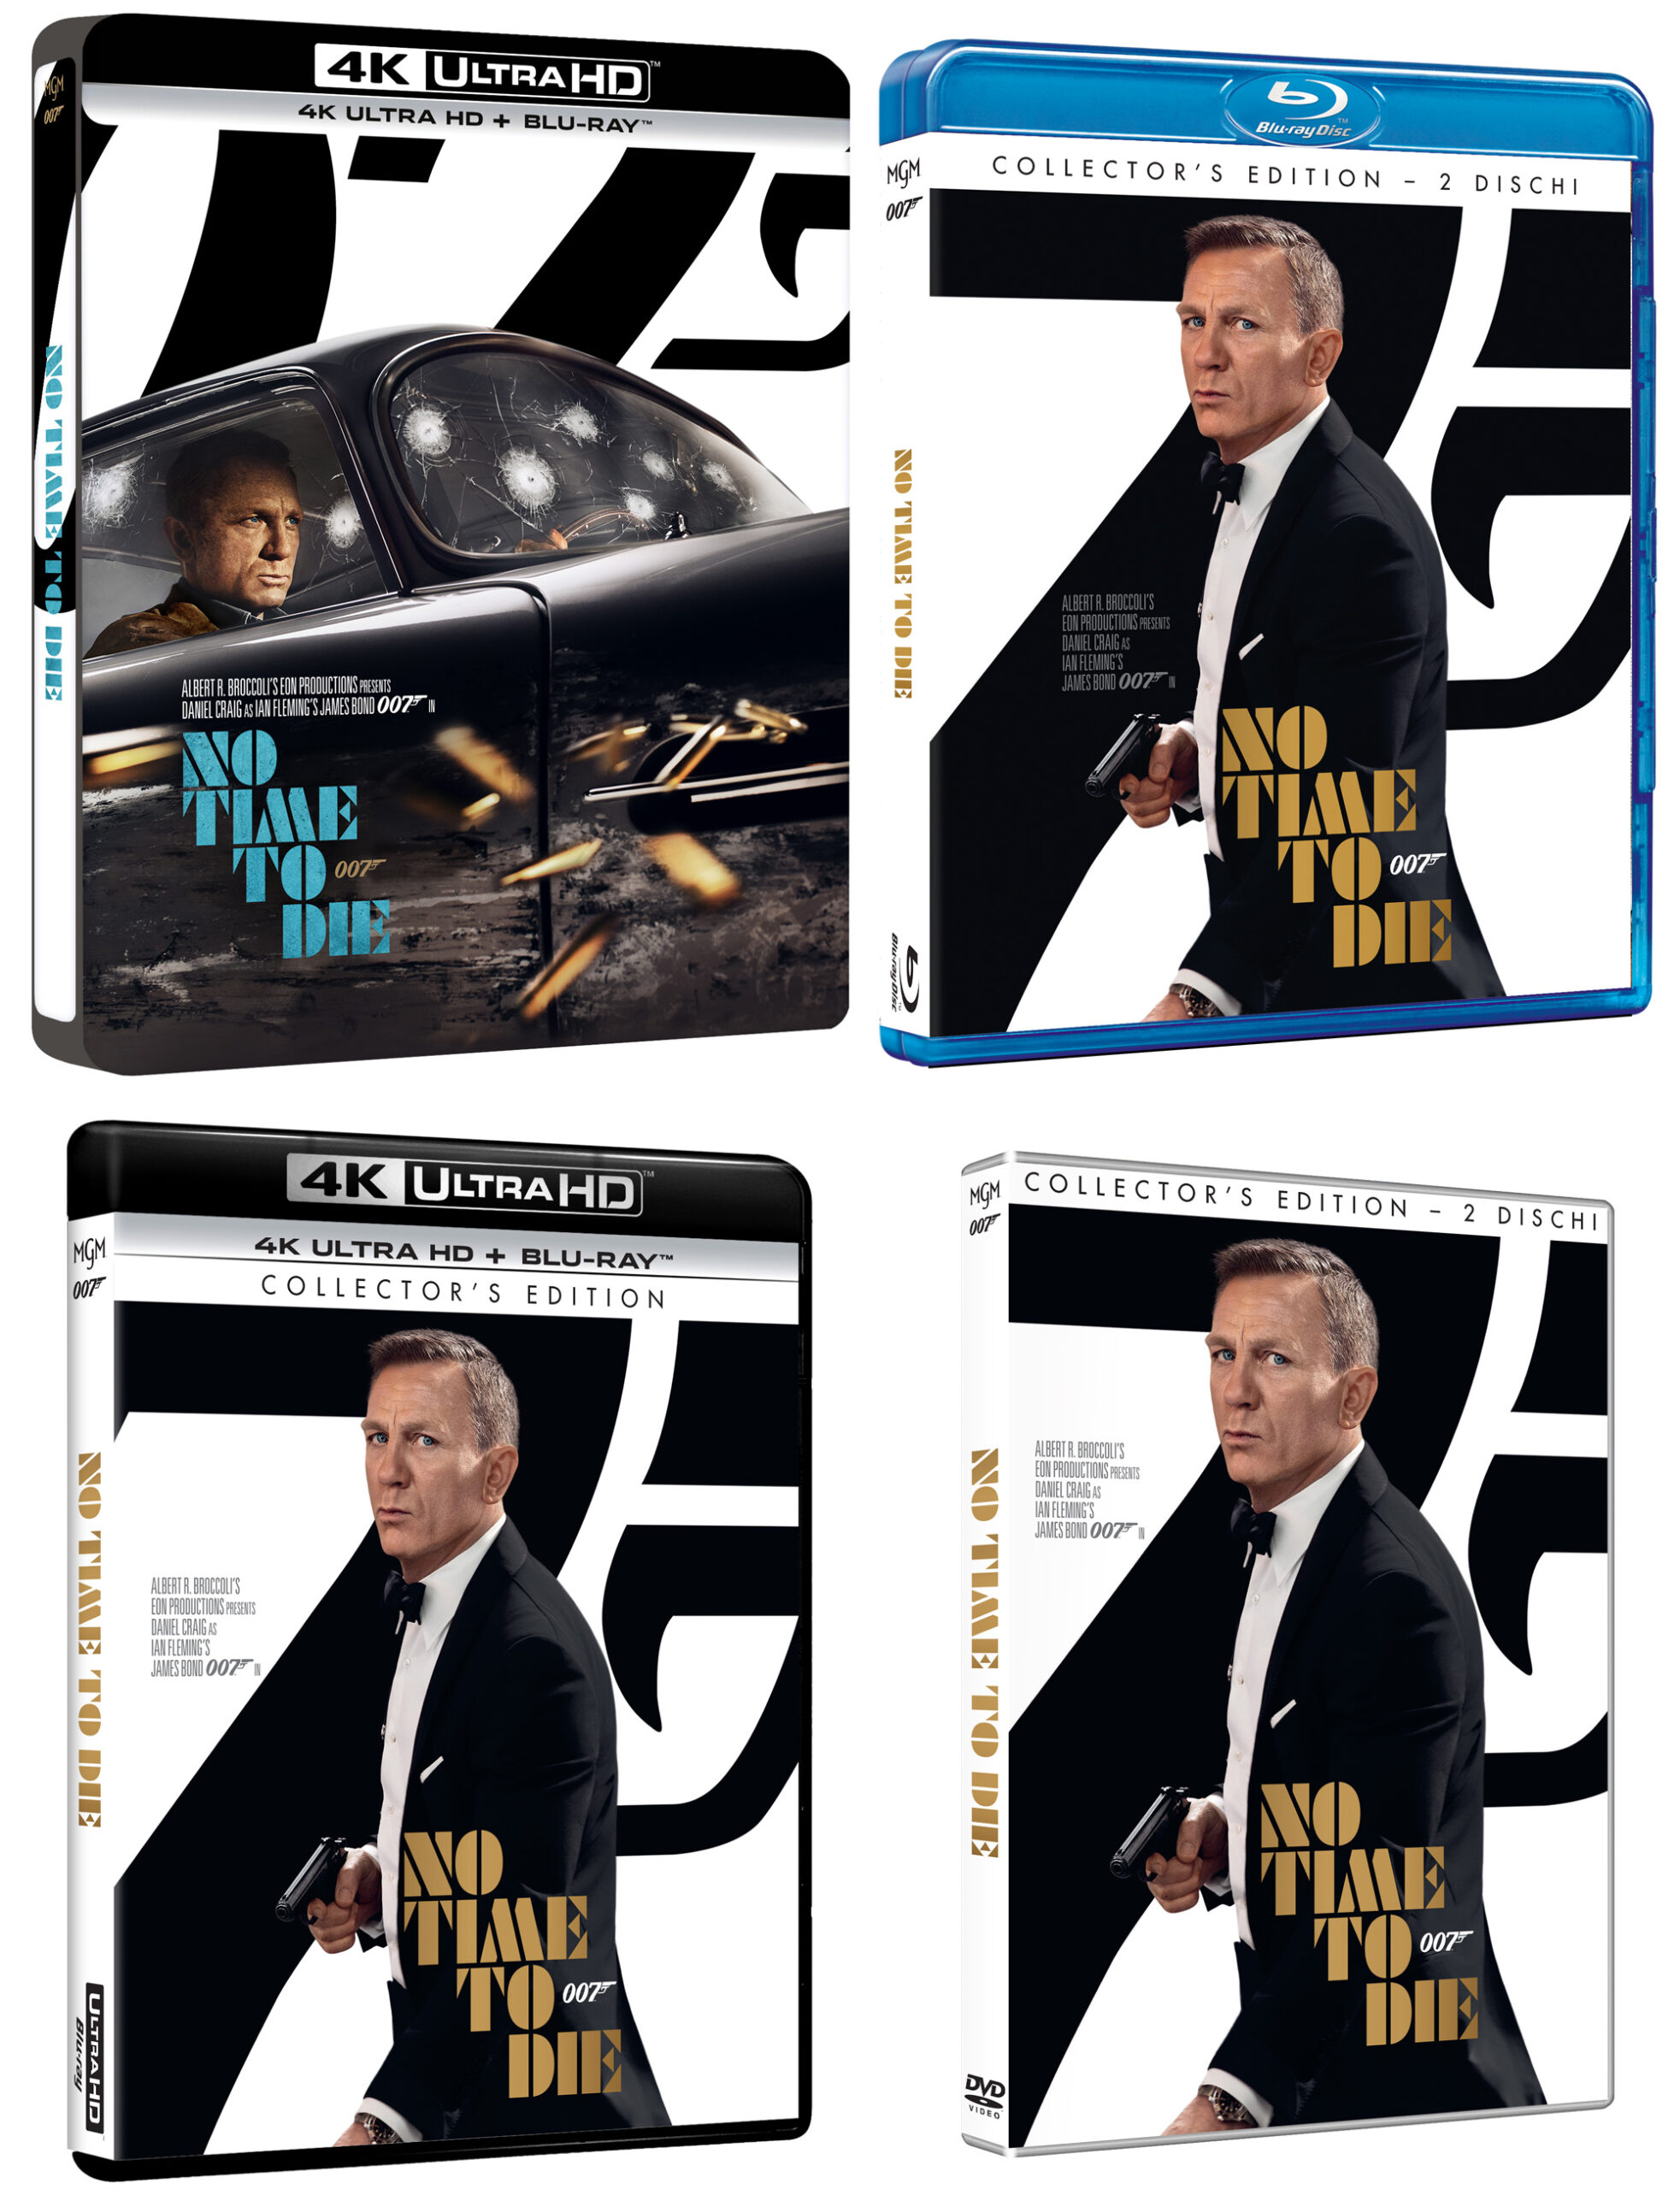 No Time To Die - Edizioni DVD, Blu-Ray, 4K UHD e SteelBook